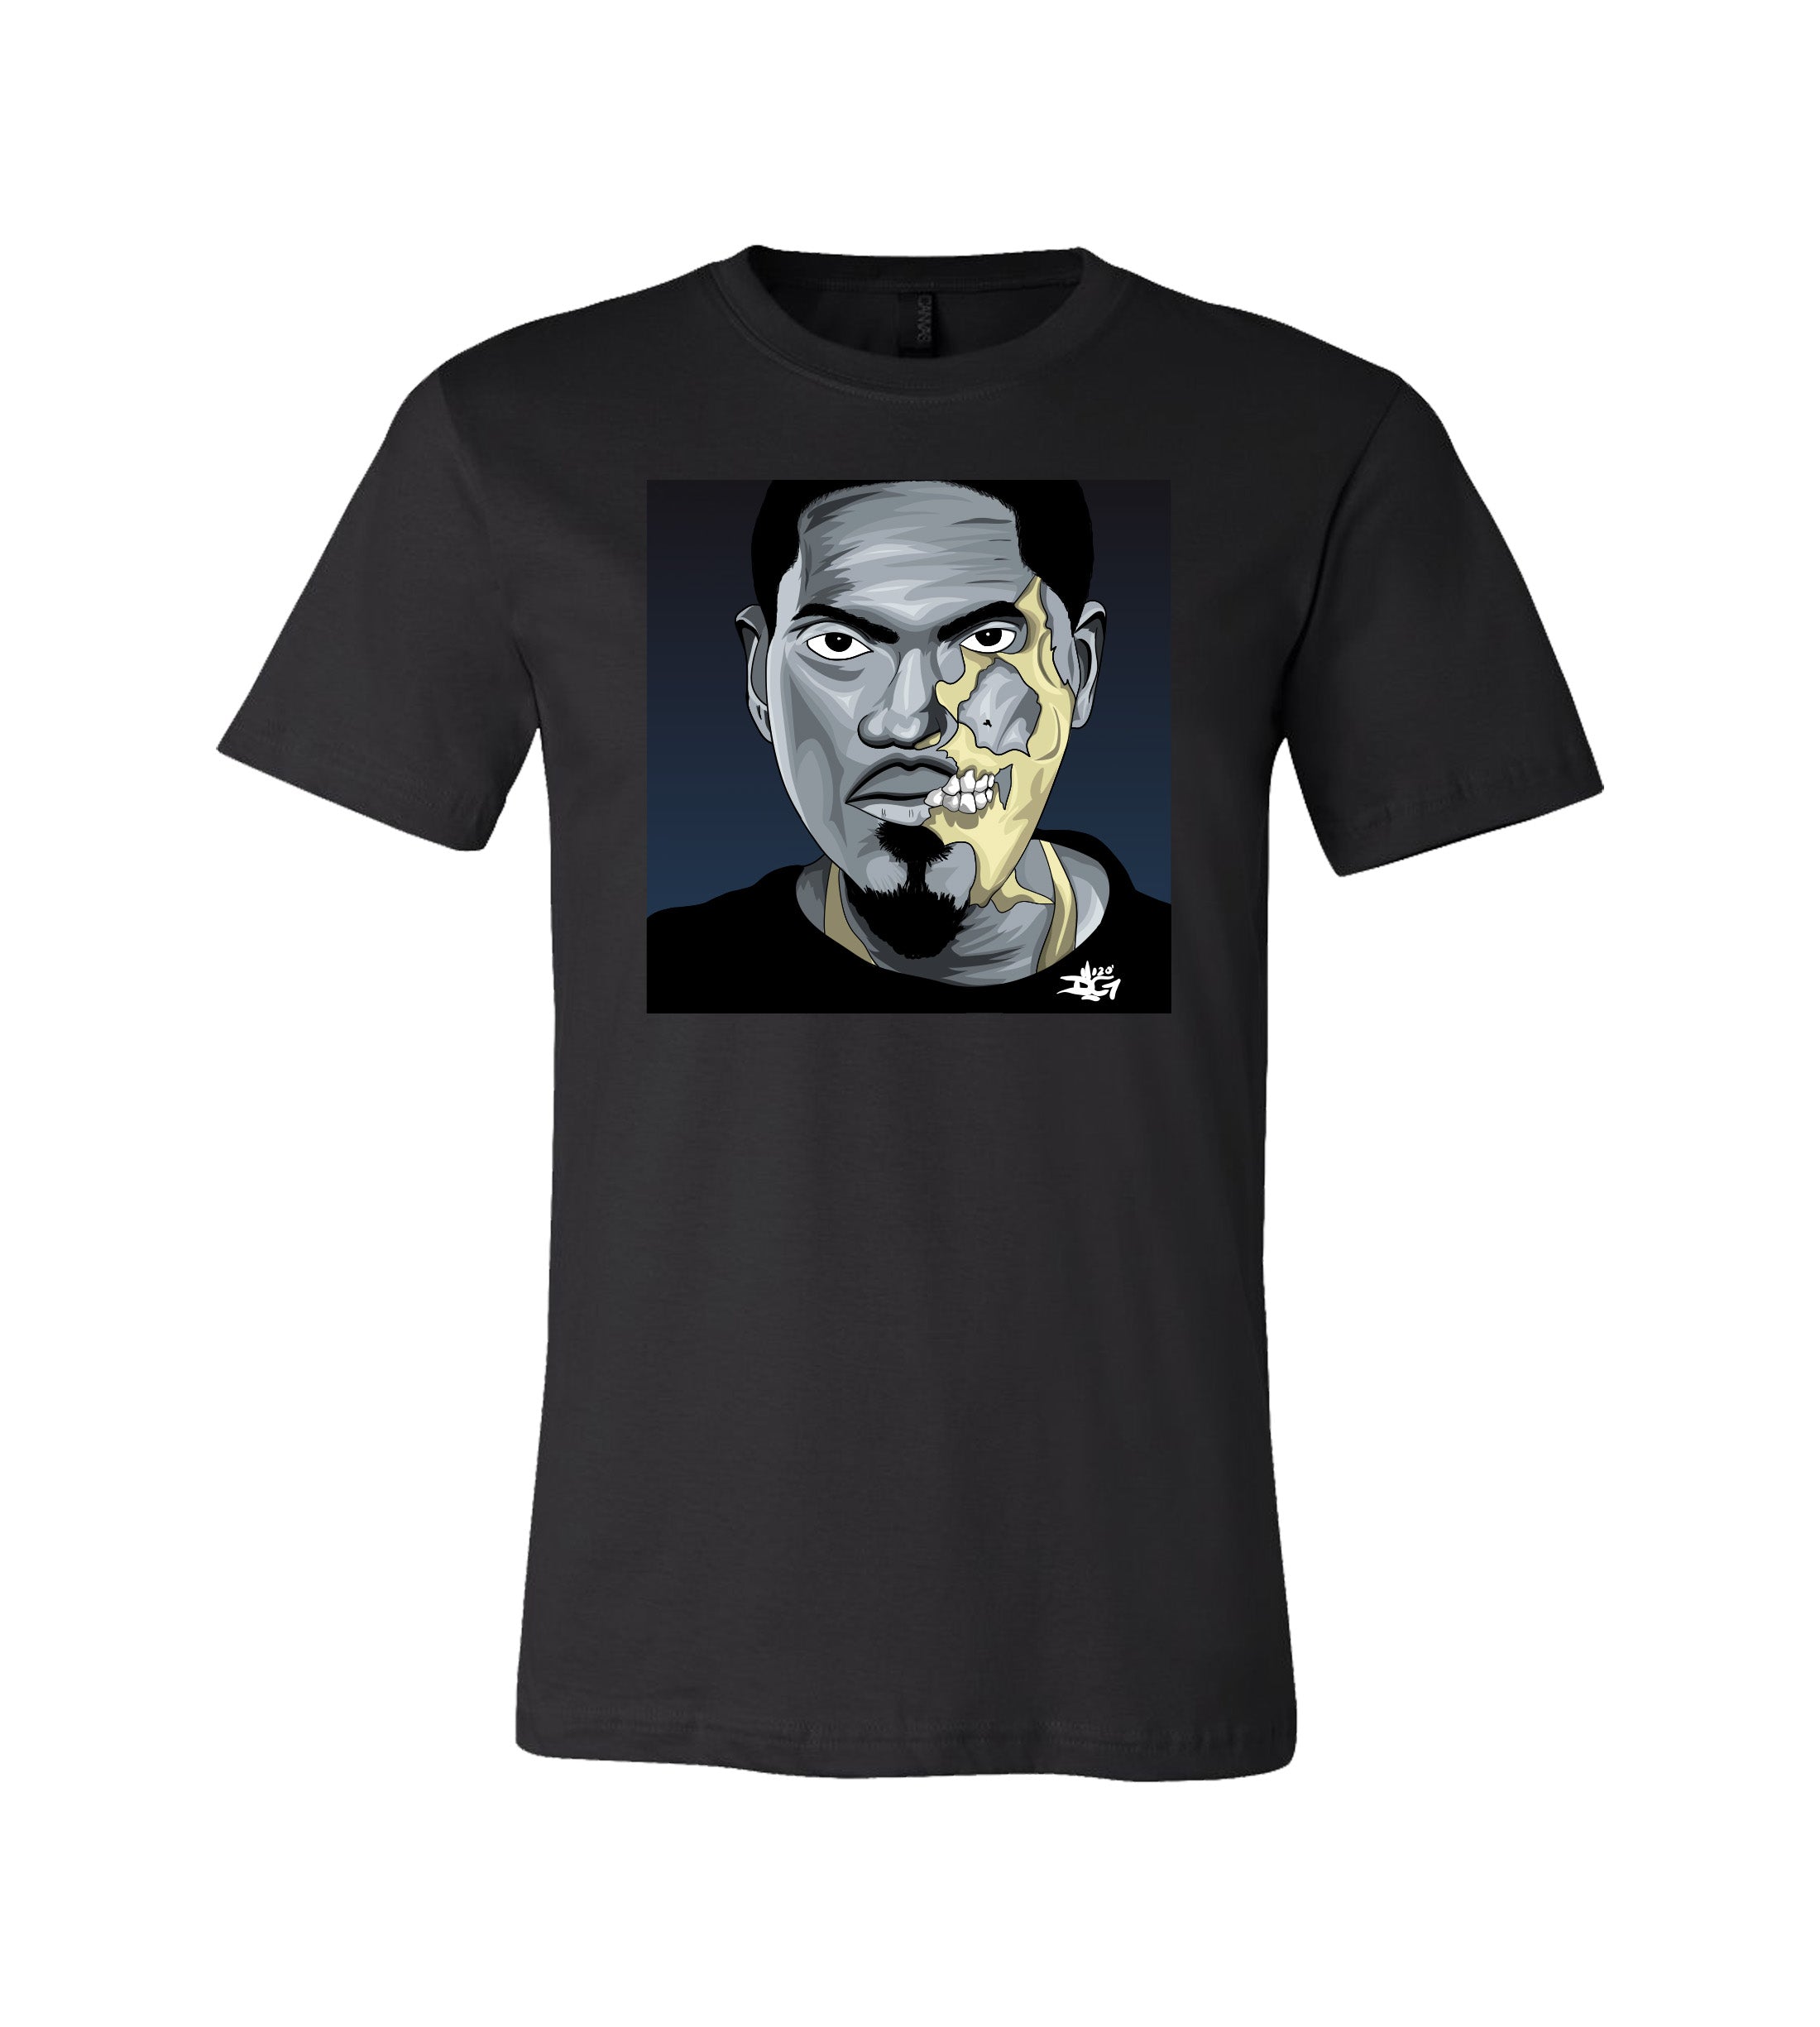 Hip Hop is DEAD Series "ETHER" Adult Uni-Sex T-shirt (Black) by Diego Garcia